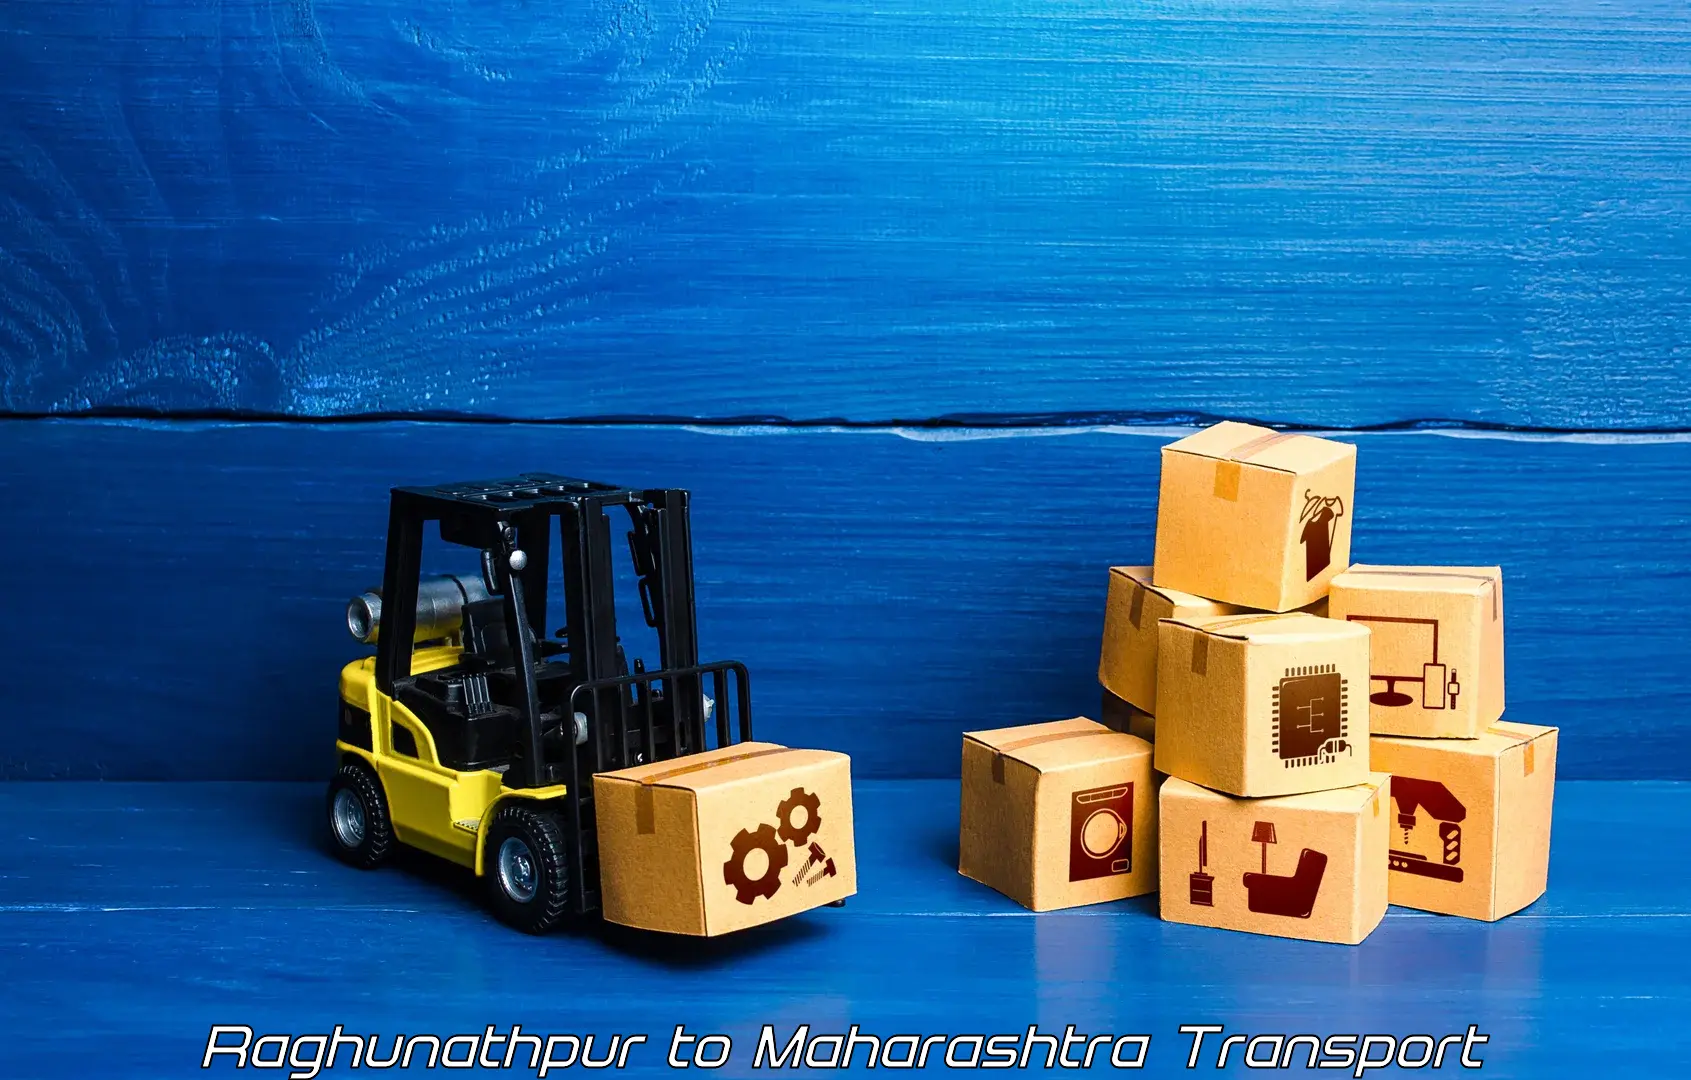 Transport in sharing in Raghunathpur to Mumbai